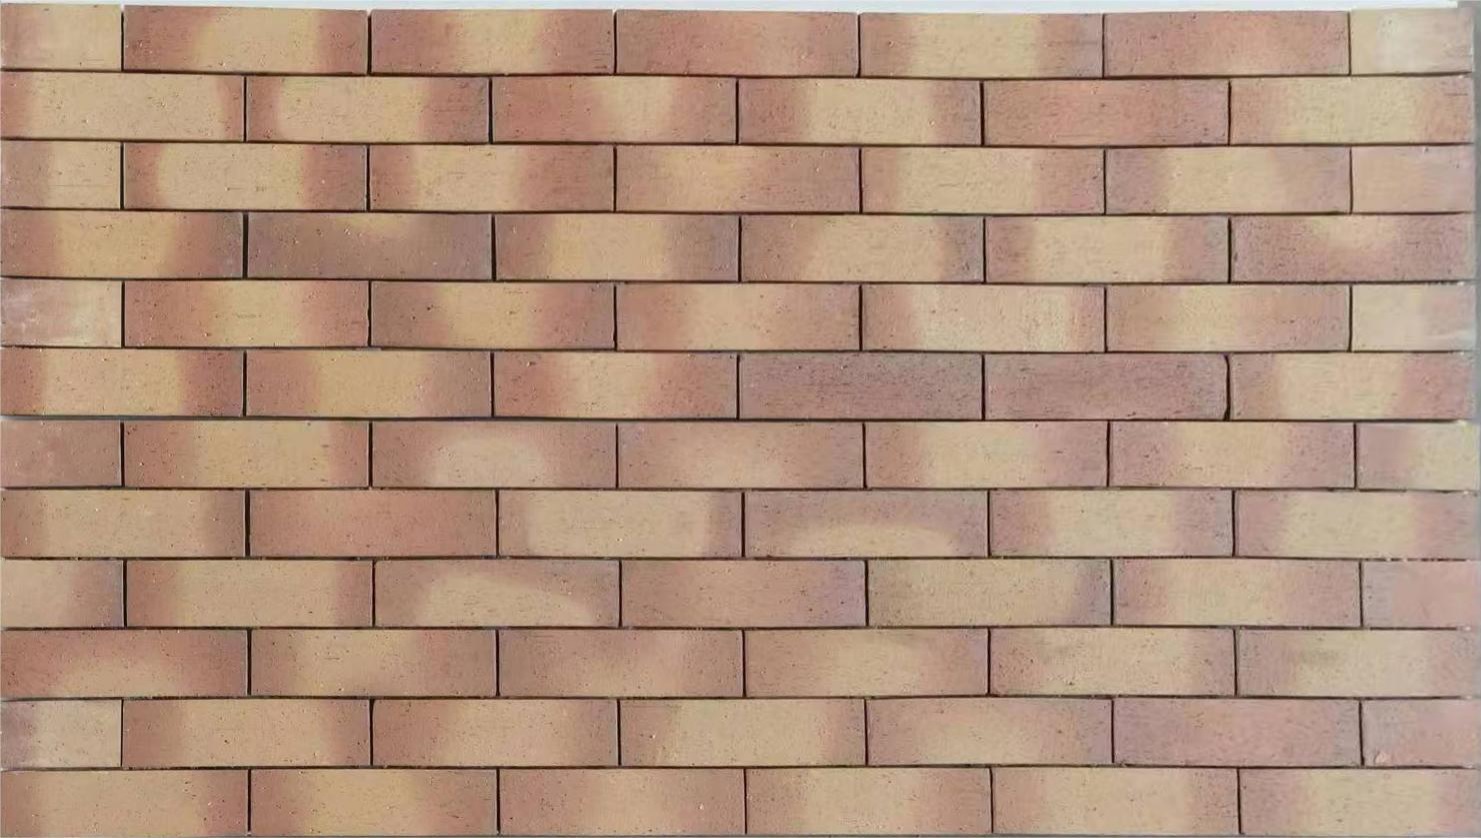 terracotta brick metal siding 